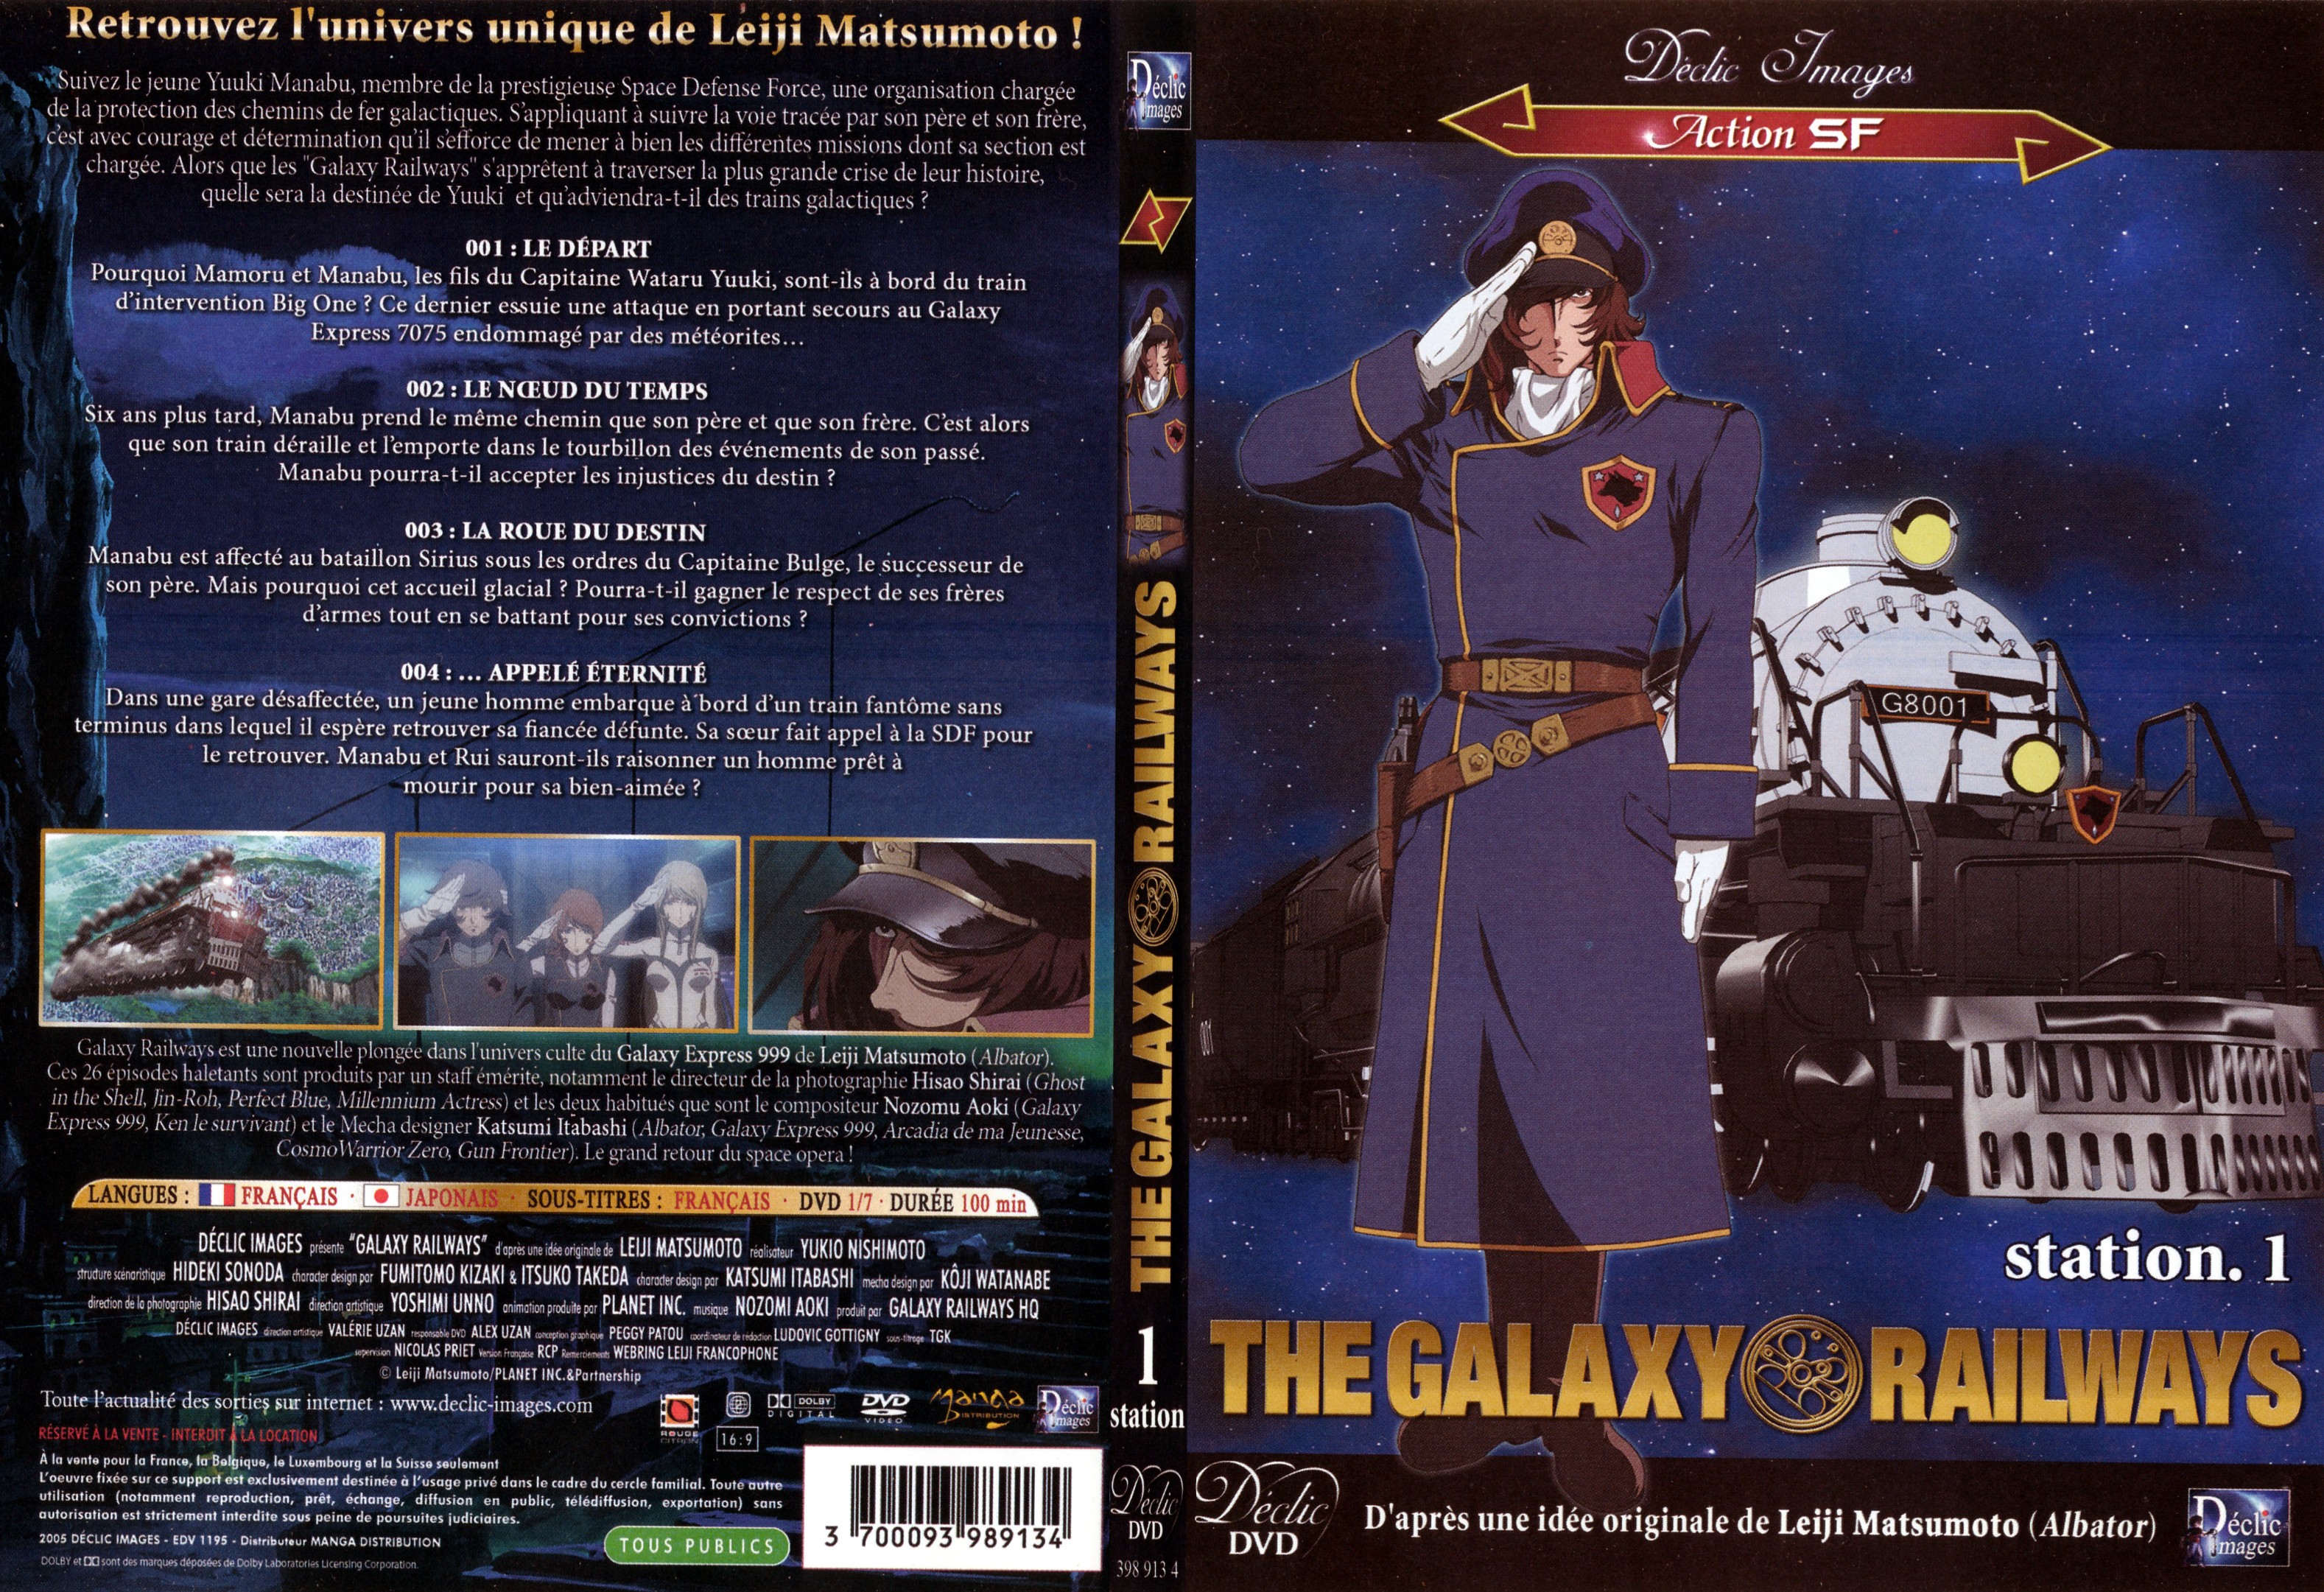 Jaquette DVD The galaxy railways station 1 - SLIM